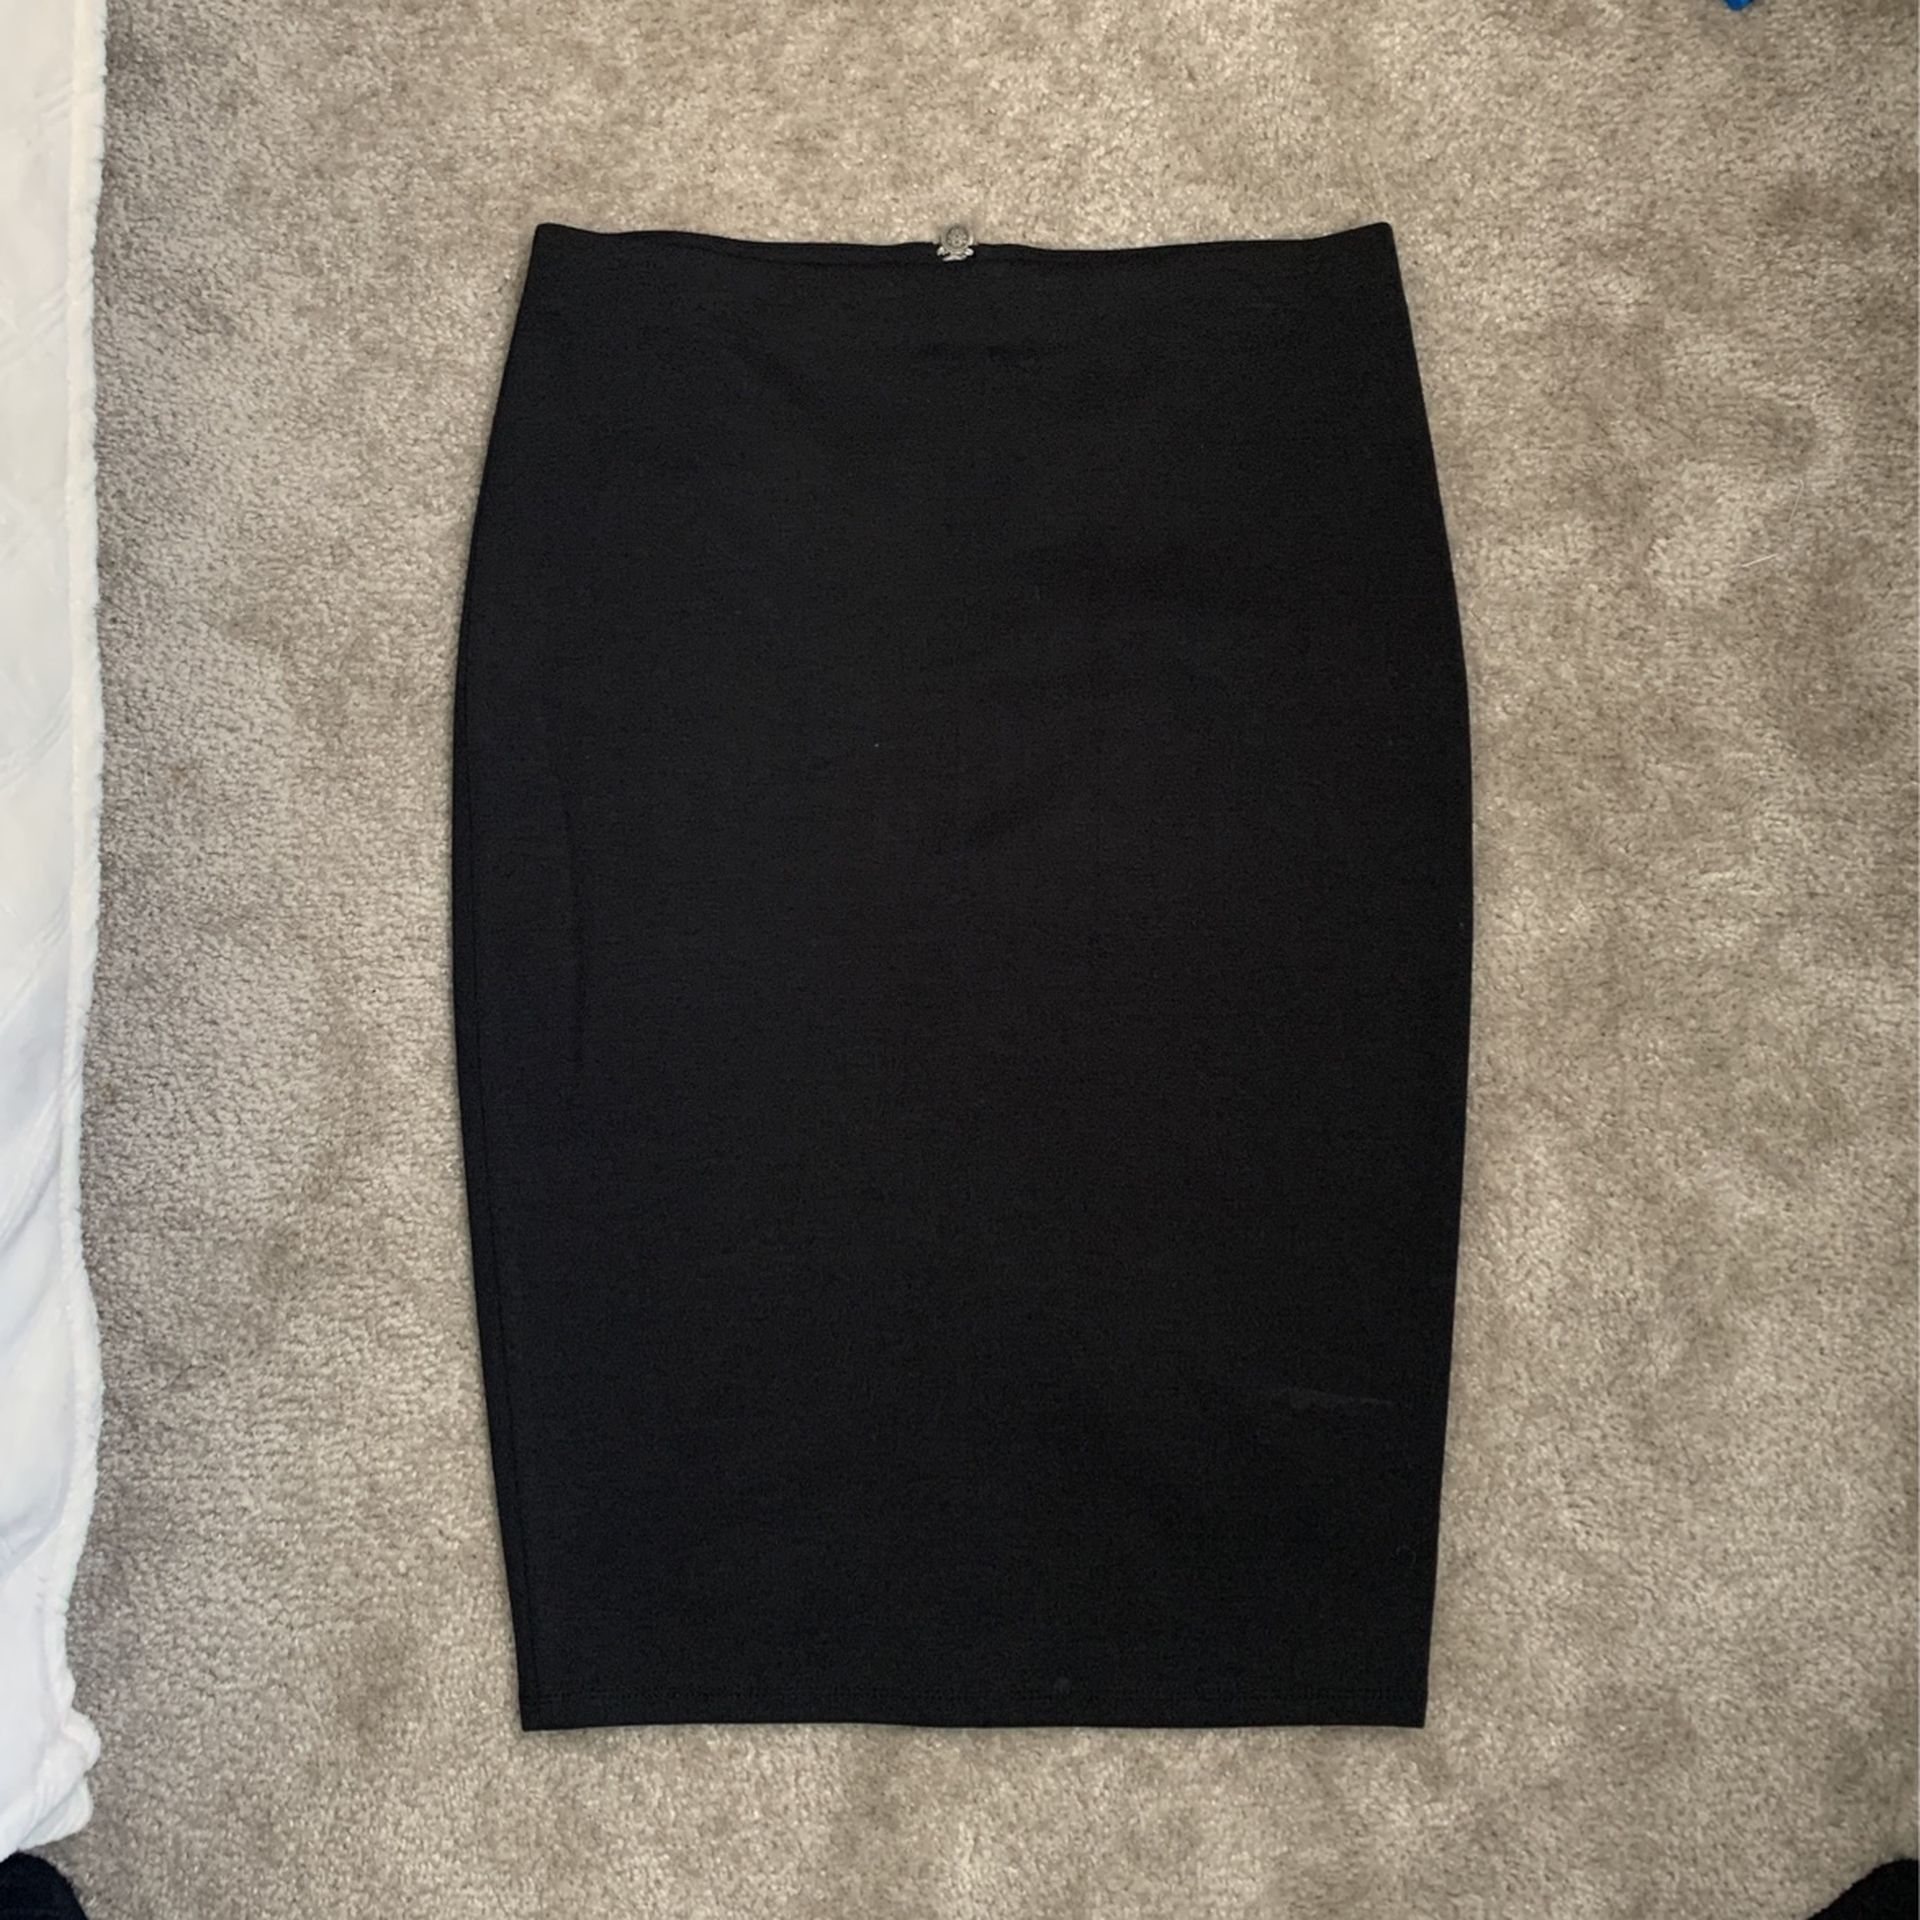 Skirt  “pencil” Jessica Simpson Black Size M Like New 